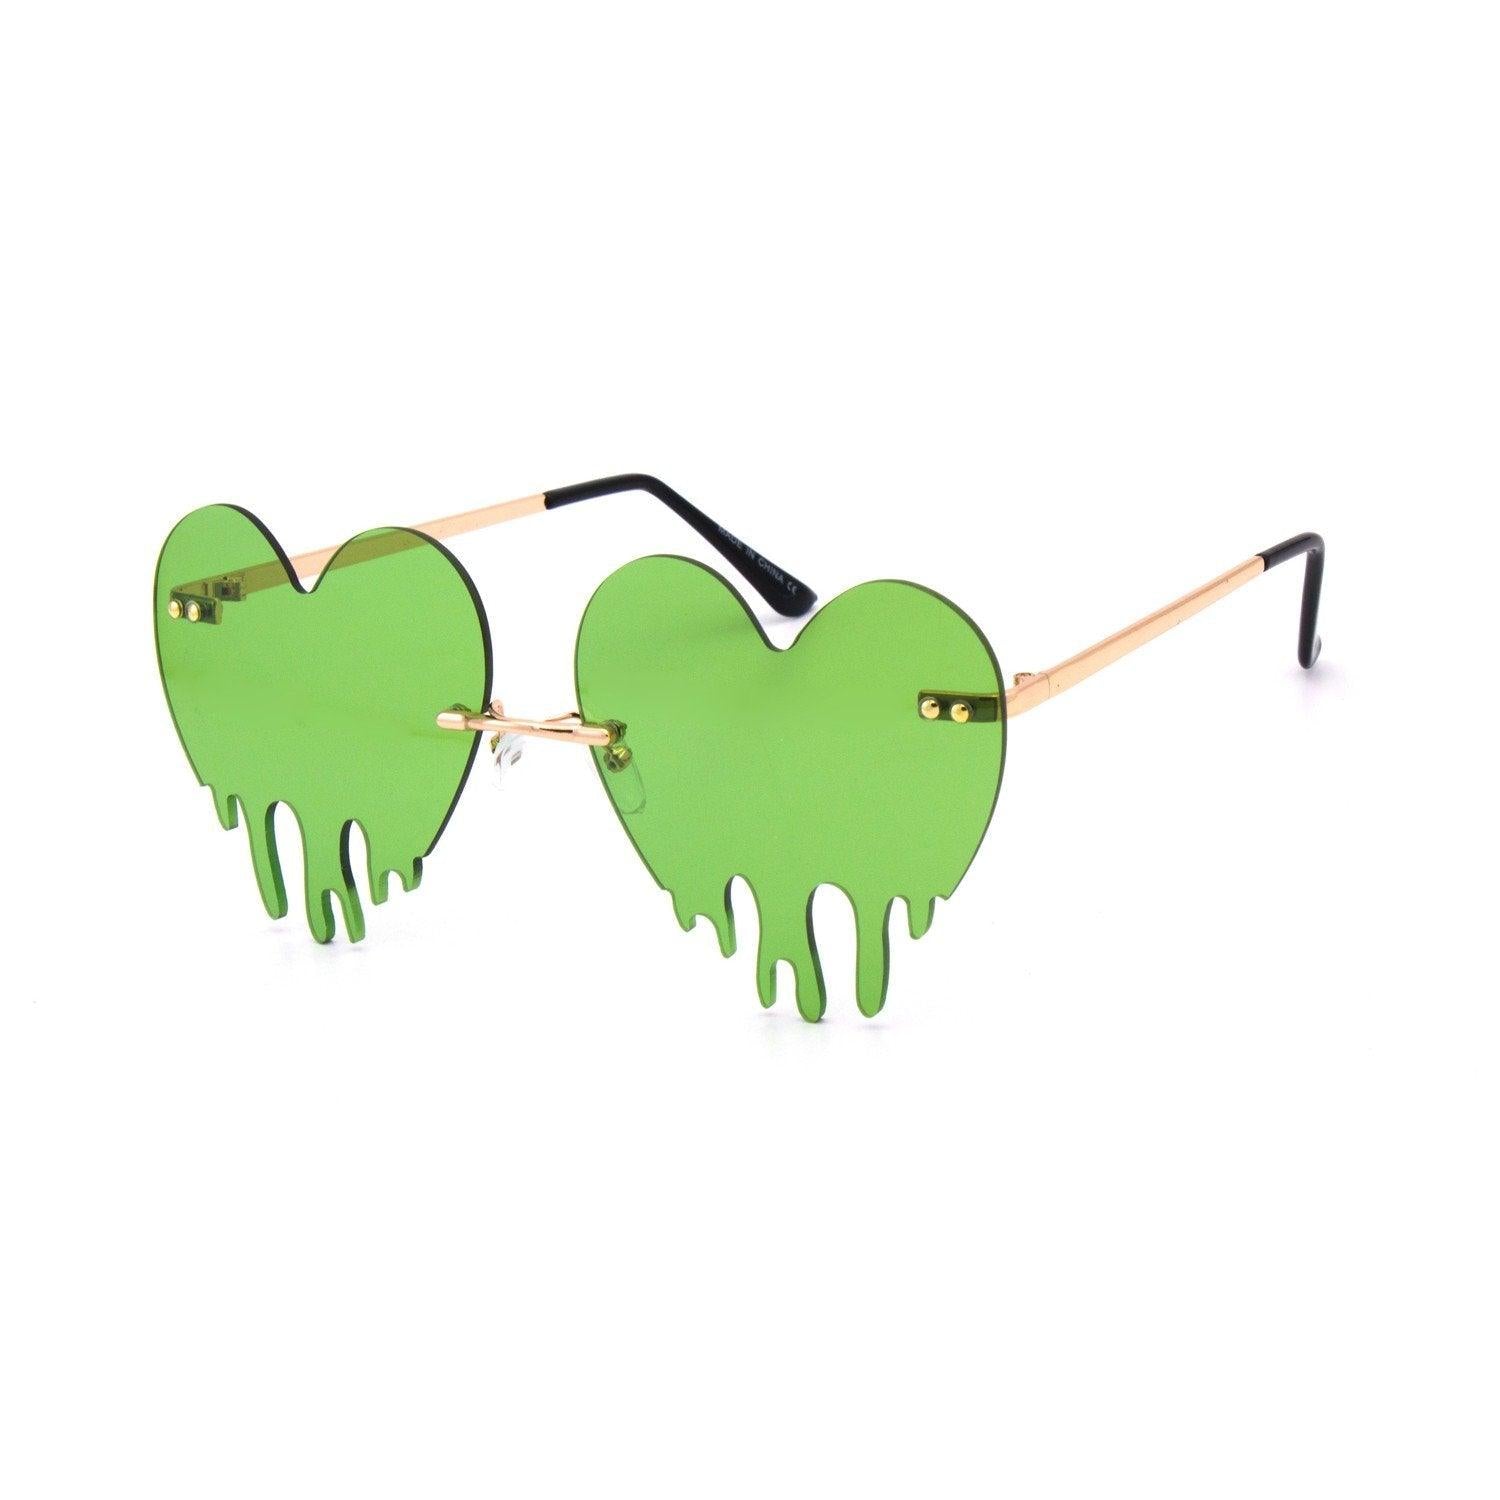 "Melting Hearts" Heart Shape Sunglasses - Mint Leafe Boutique 